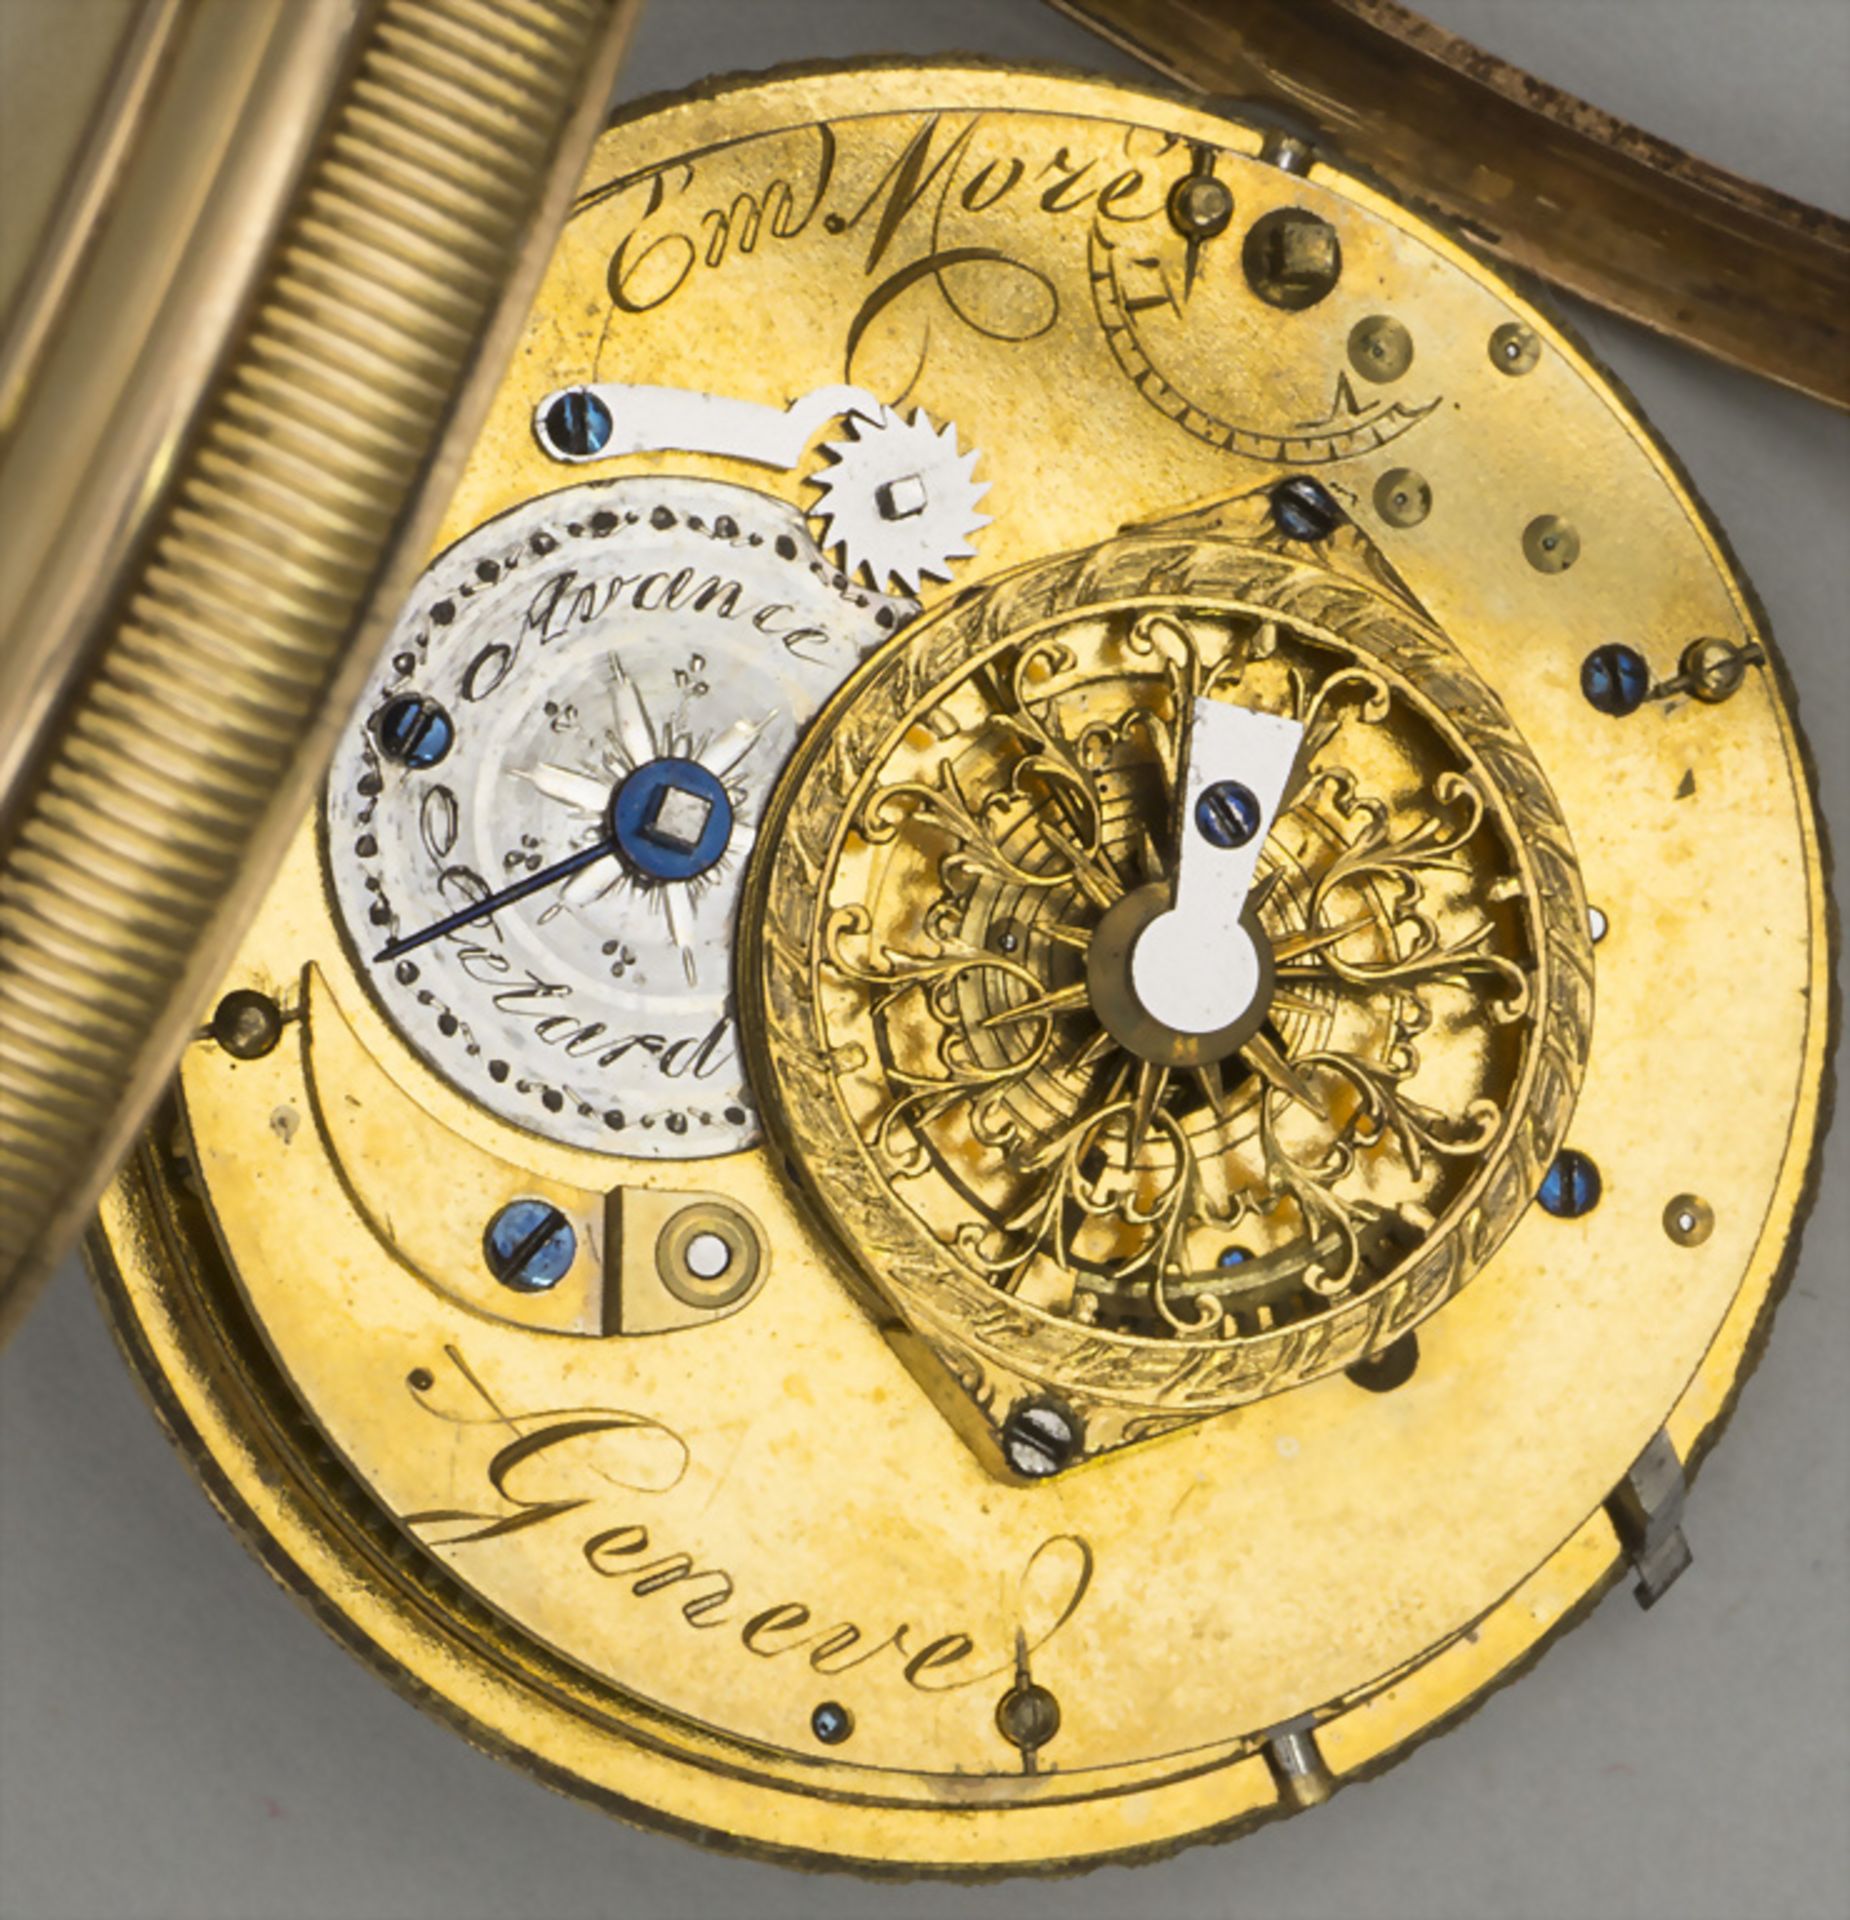 Offene Taschenuhr / An 18k gold open faced watch, Emile Moré à Geneve, Genf, um 1800 - Bild 4 aus 5